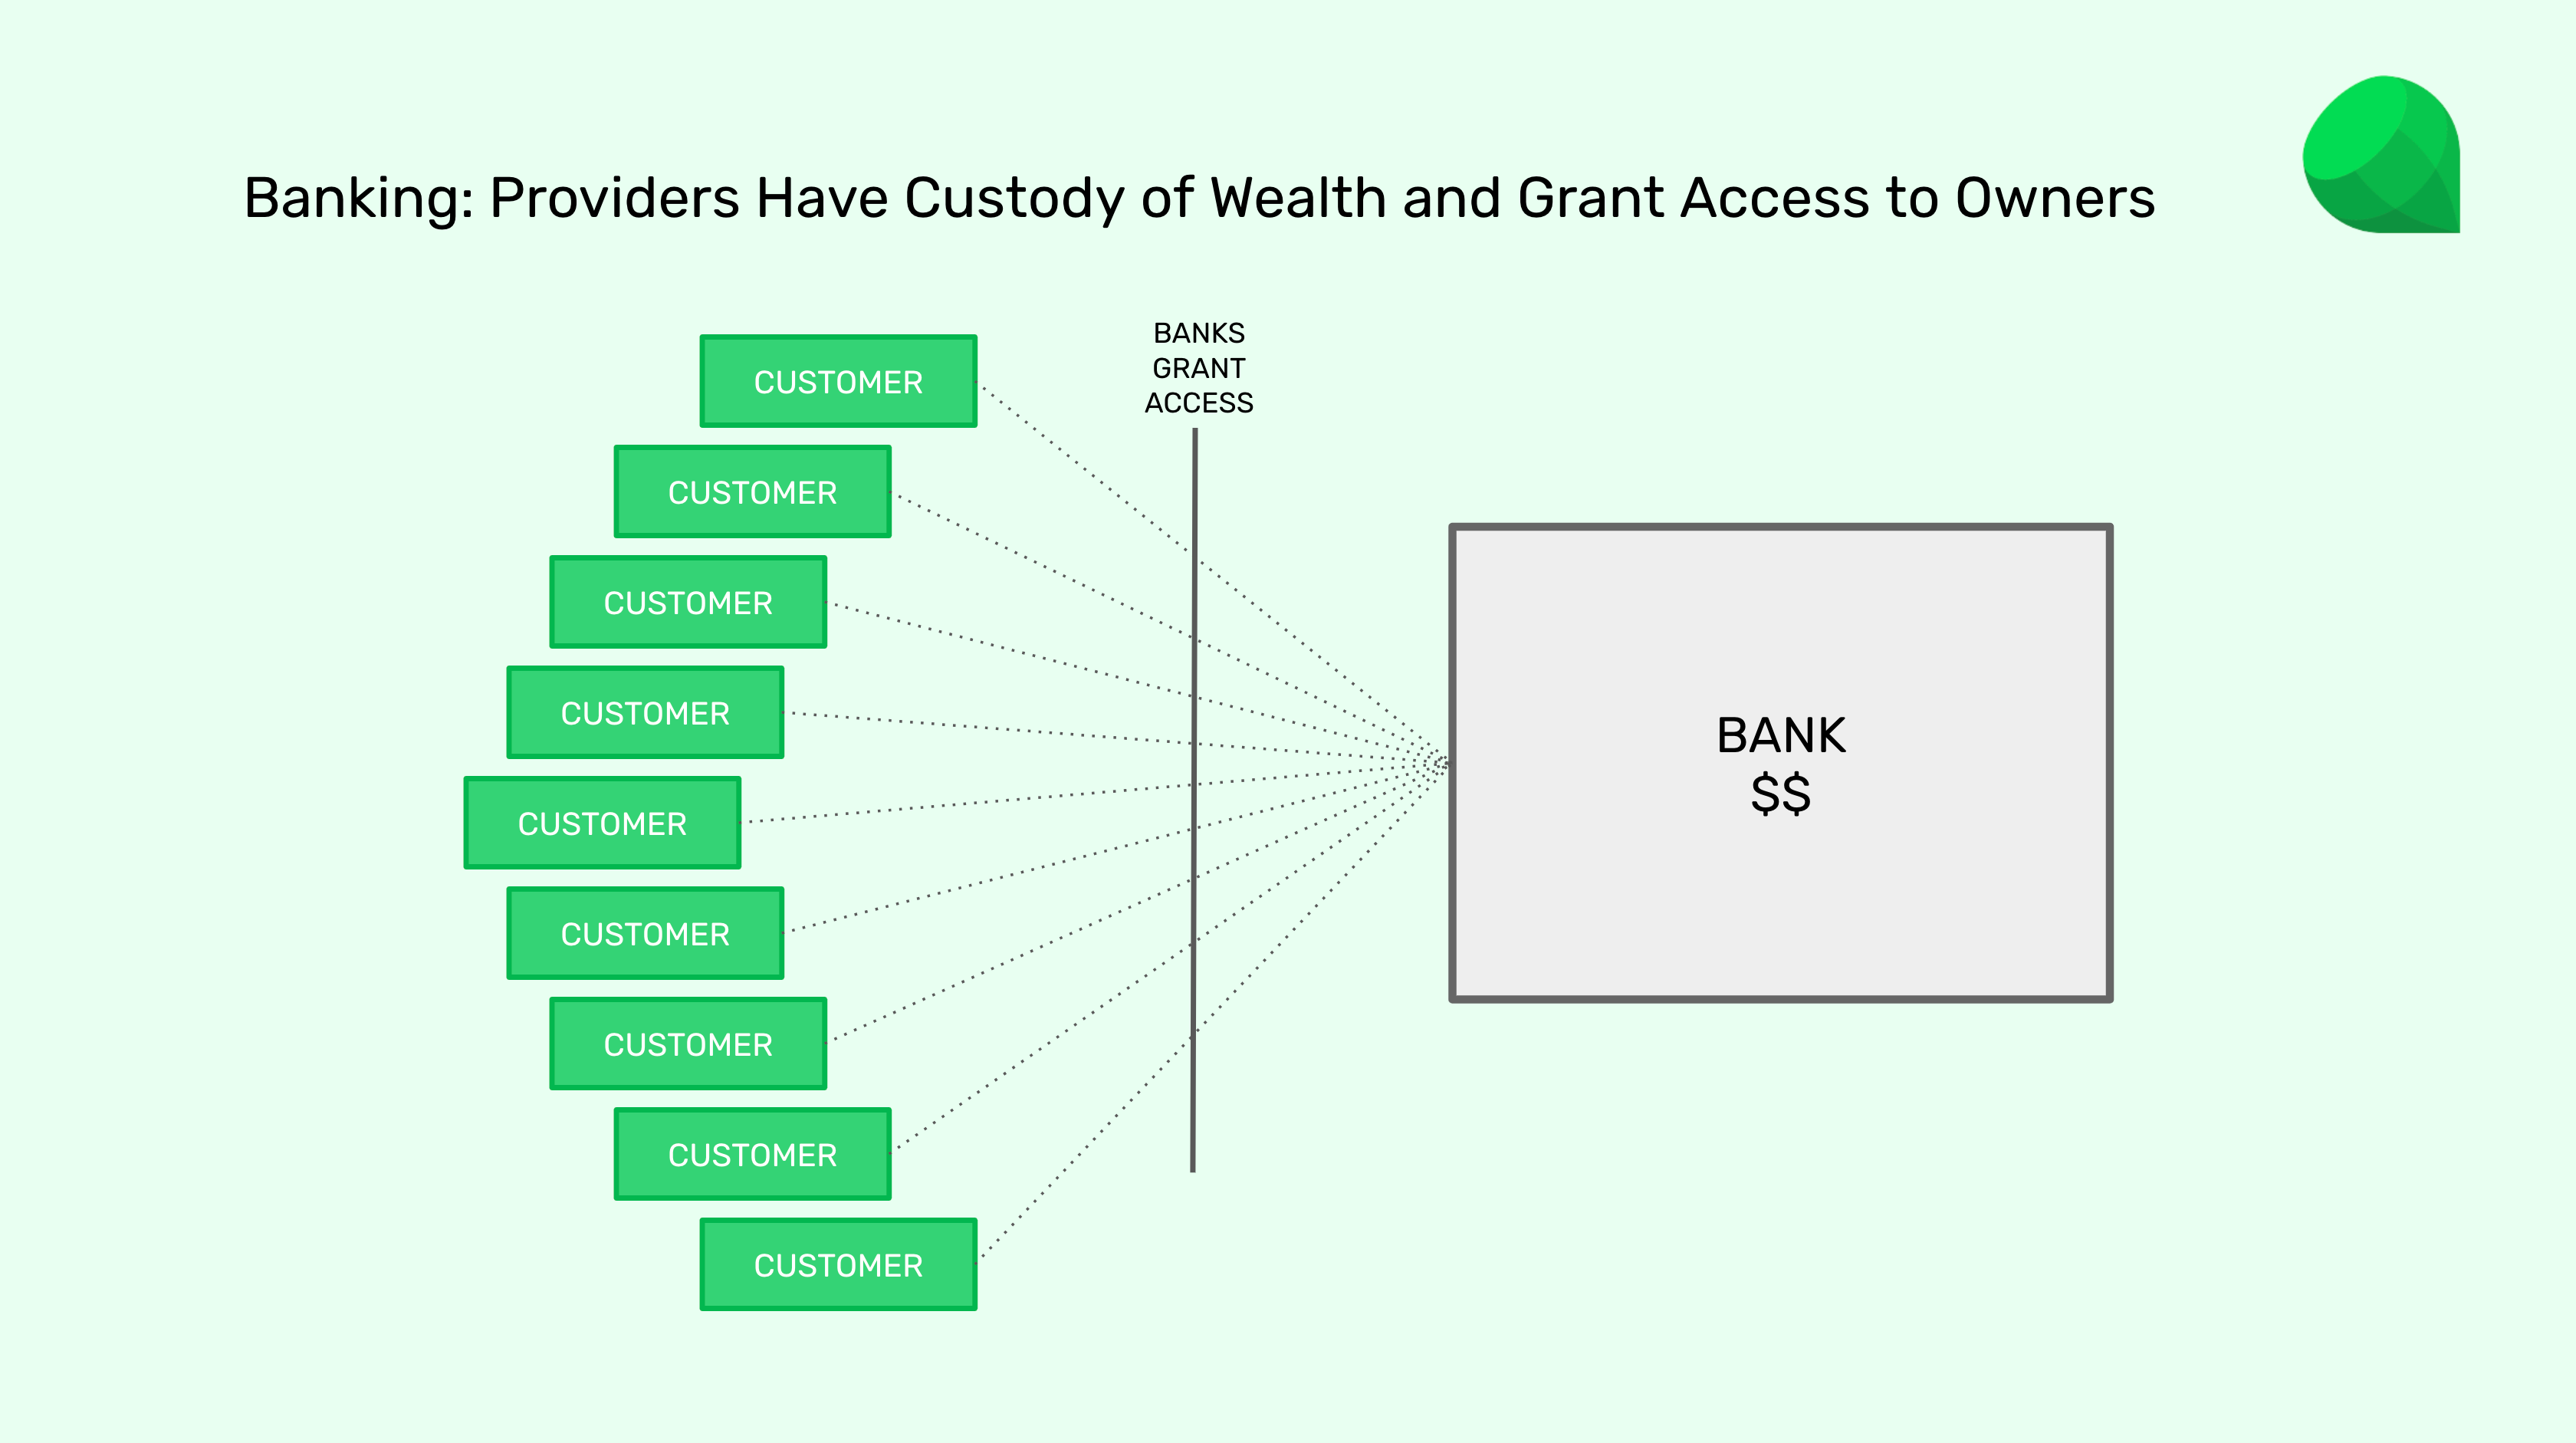 Banks have custody of wealth.